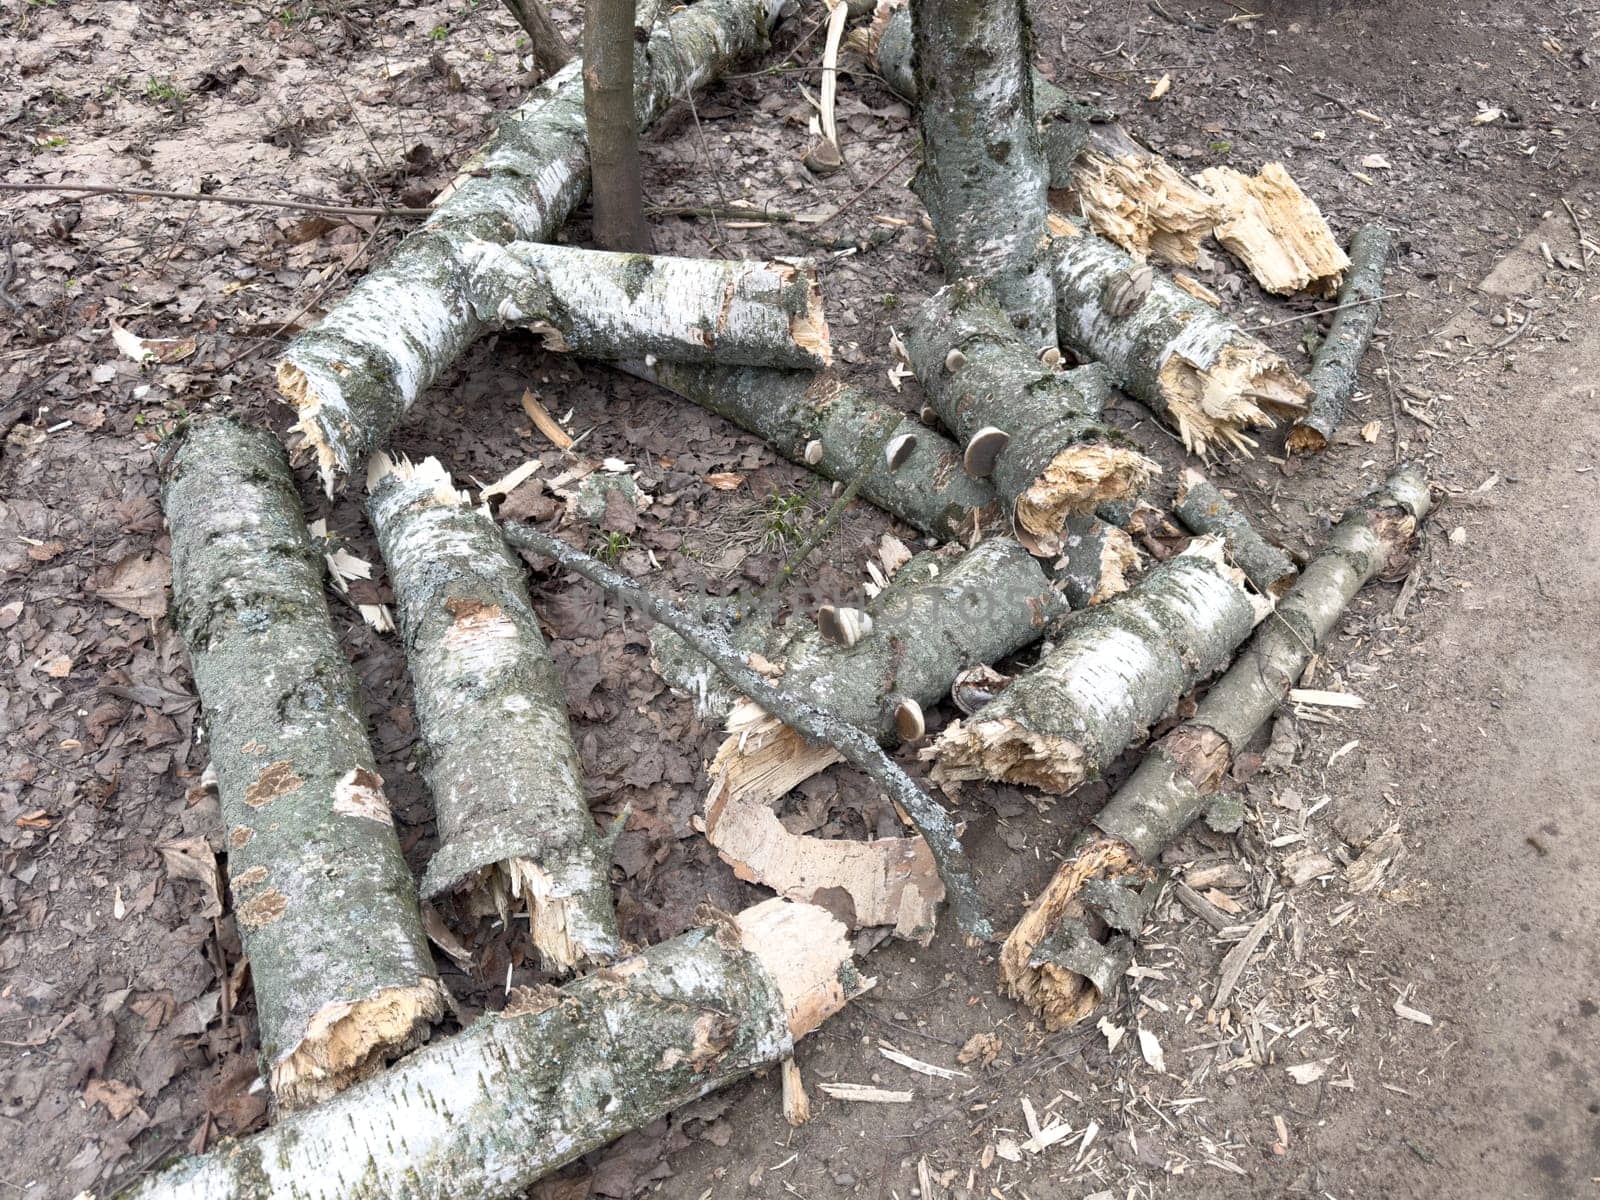 old broken logs lie in the forest